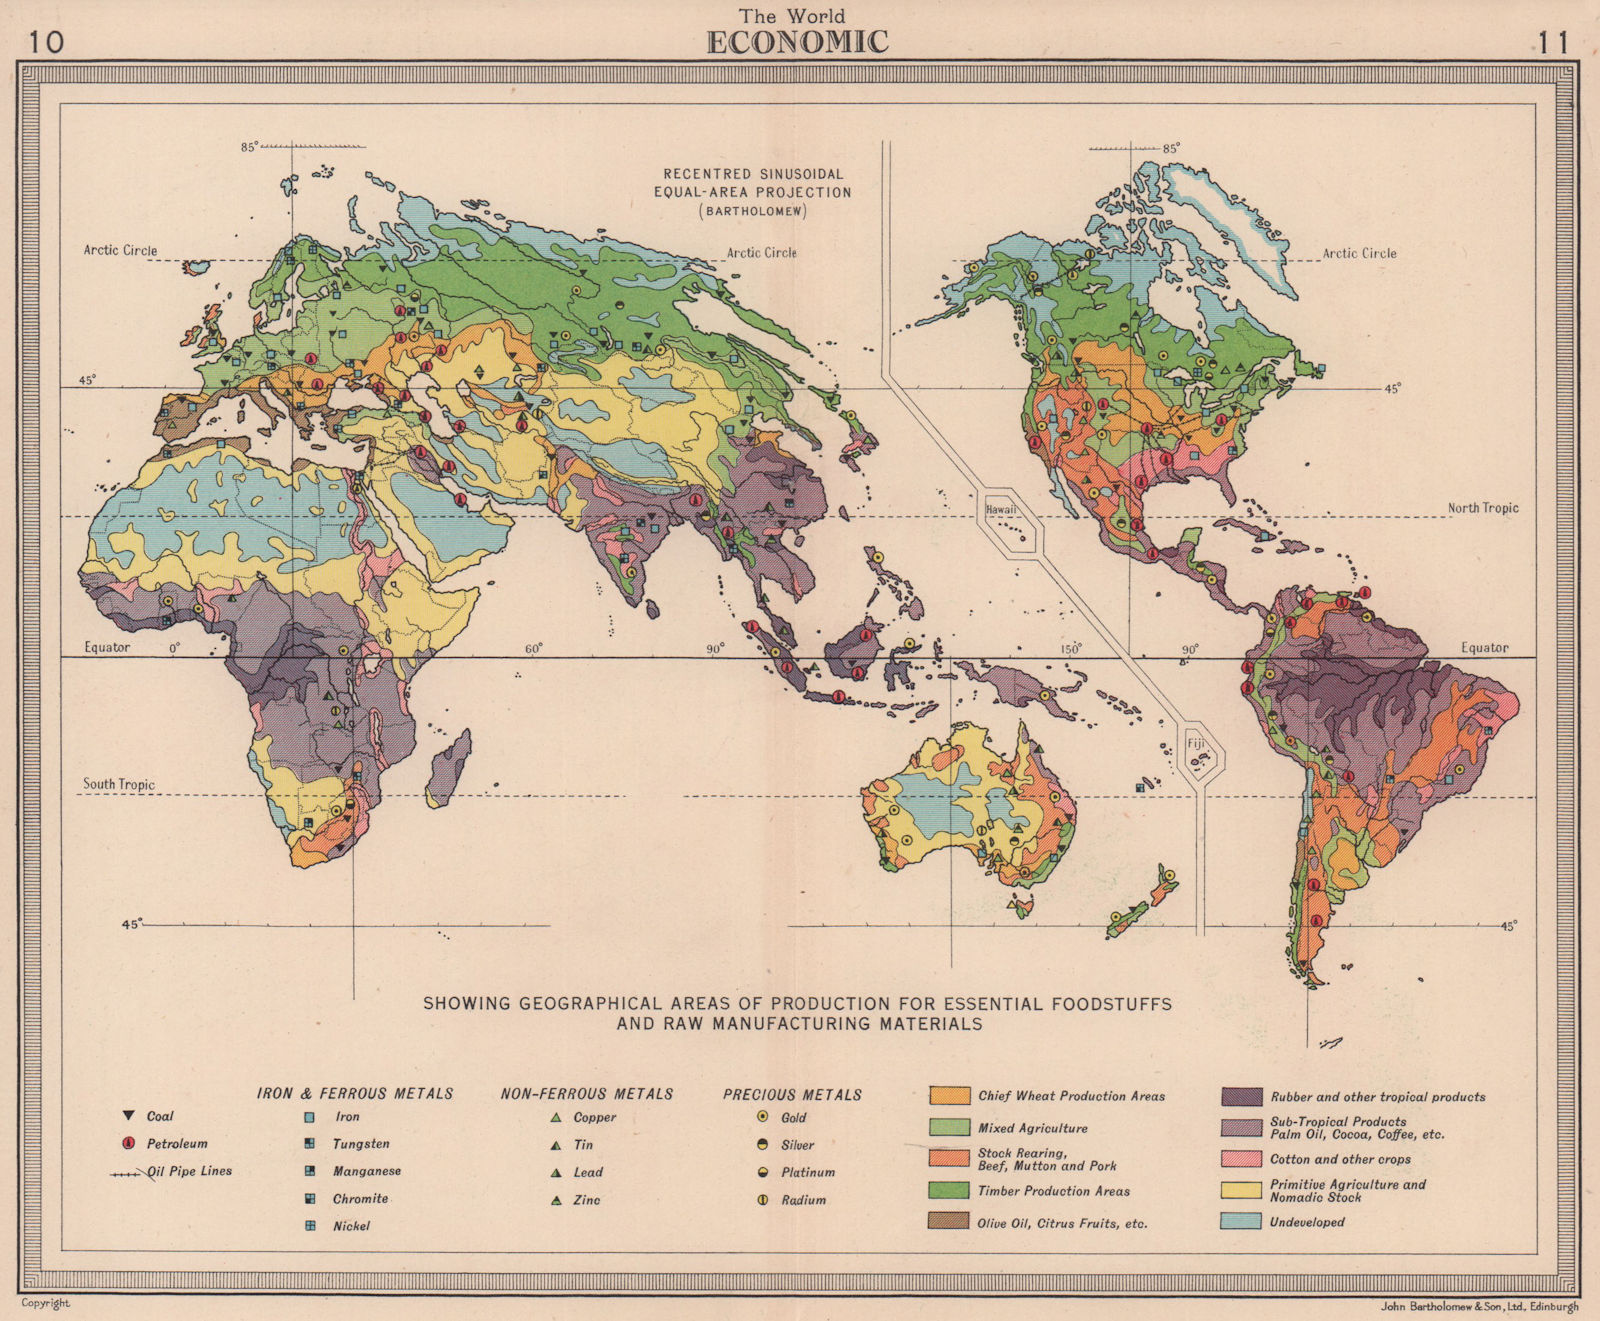 World Economic. Recentred Sinusoidal equal-area projection. BARTHOLOMEW 1949 map